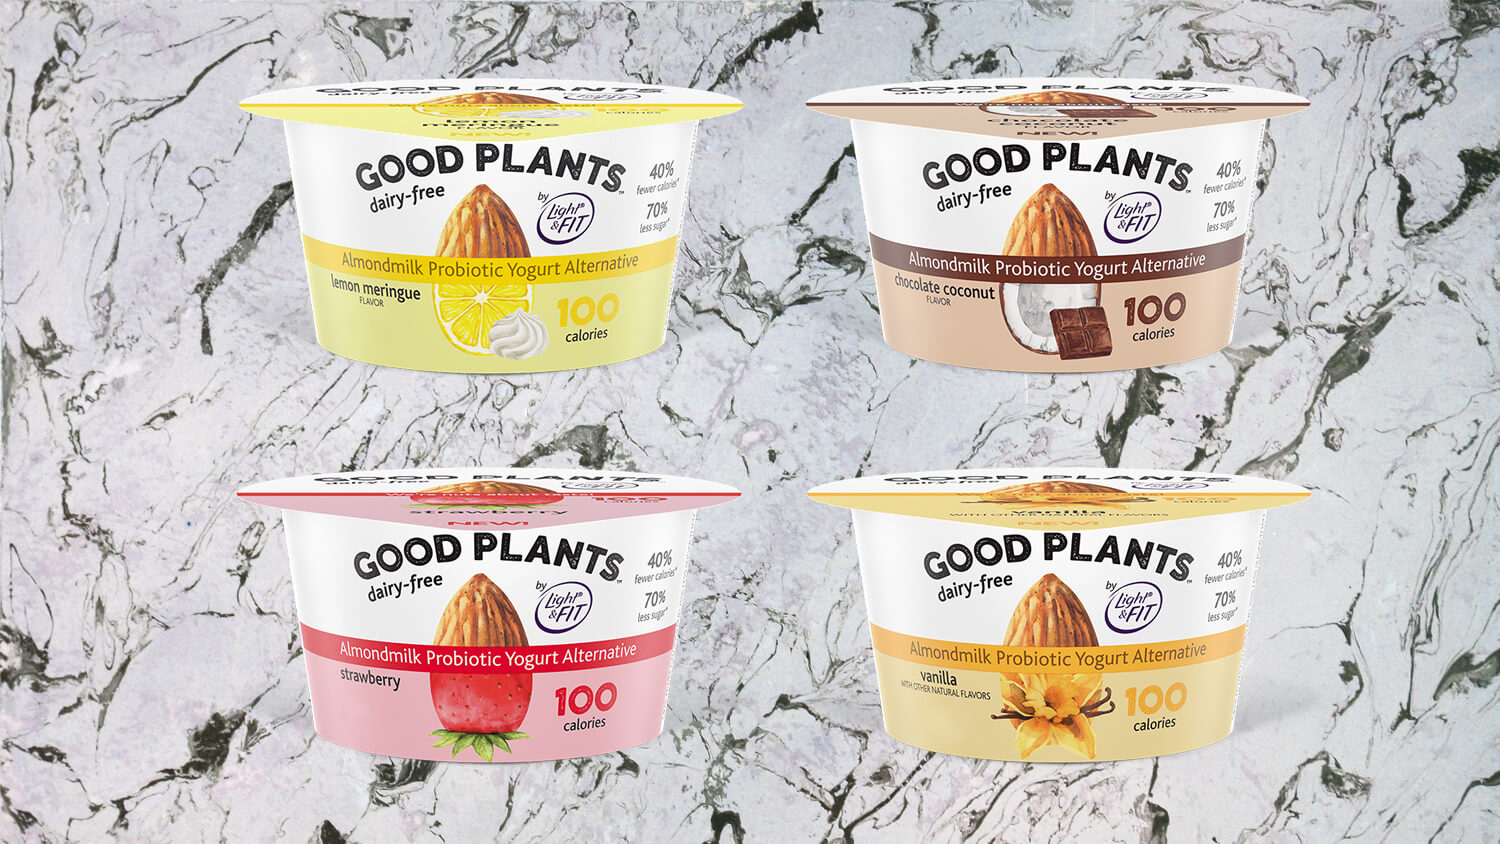 Danone Launches Vegan Probiotic Almond Light & Fit Yogurt in 4 Dairy-Free Flavors